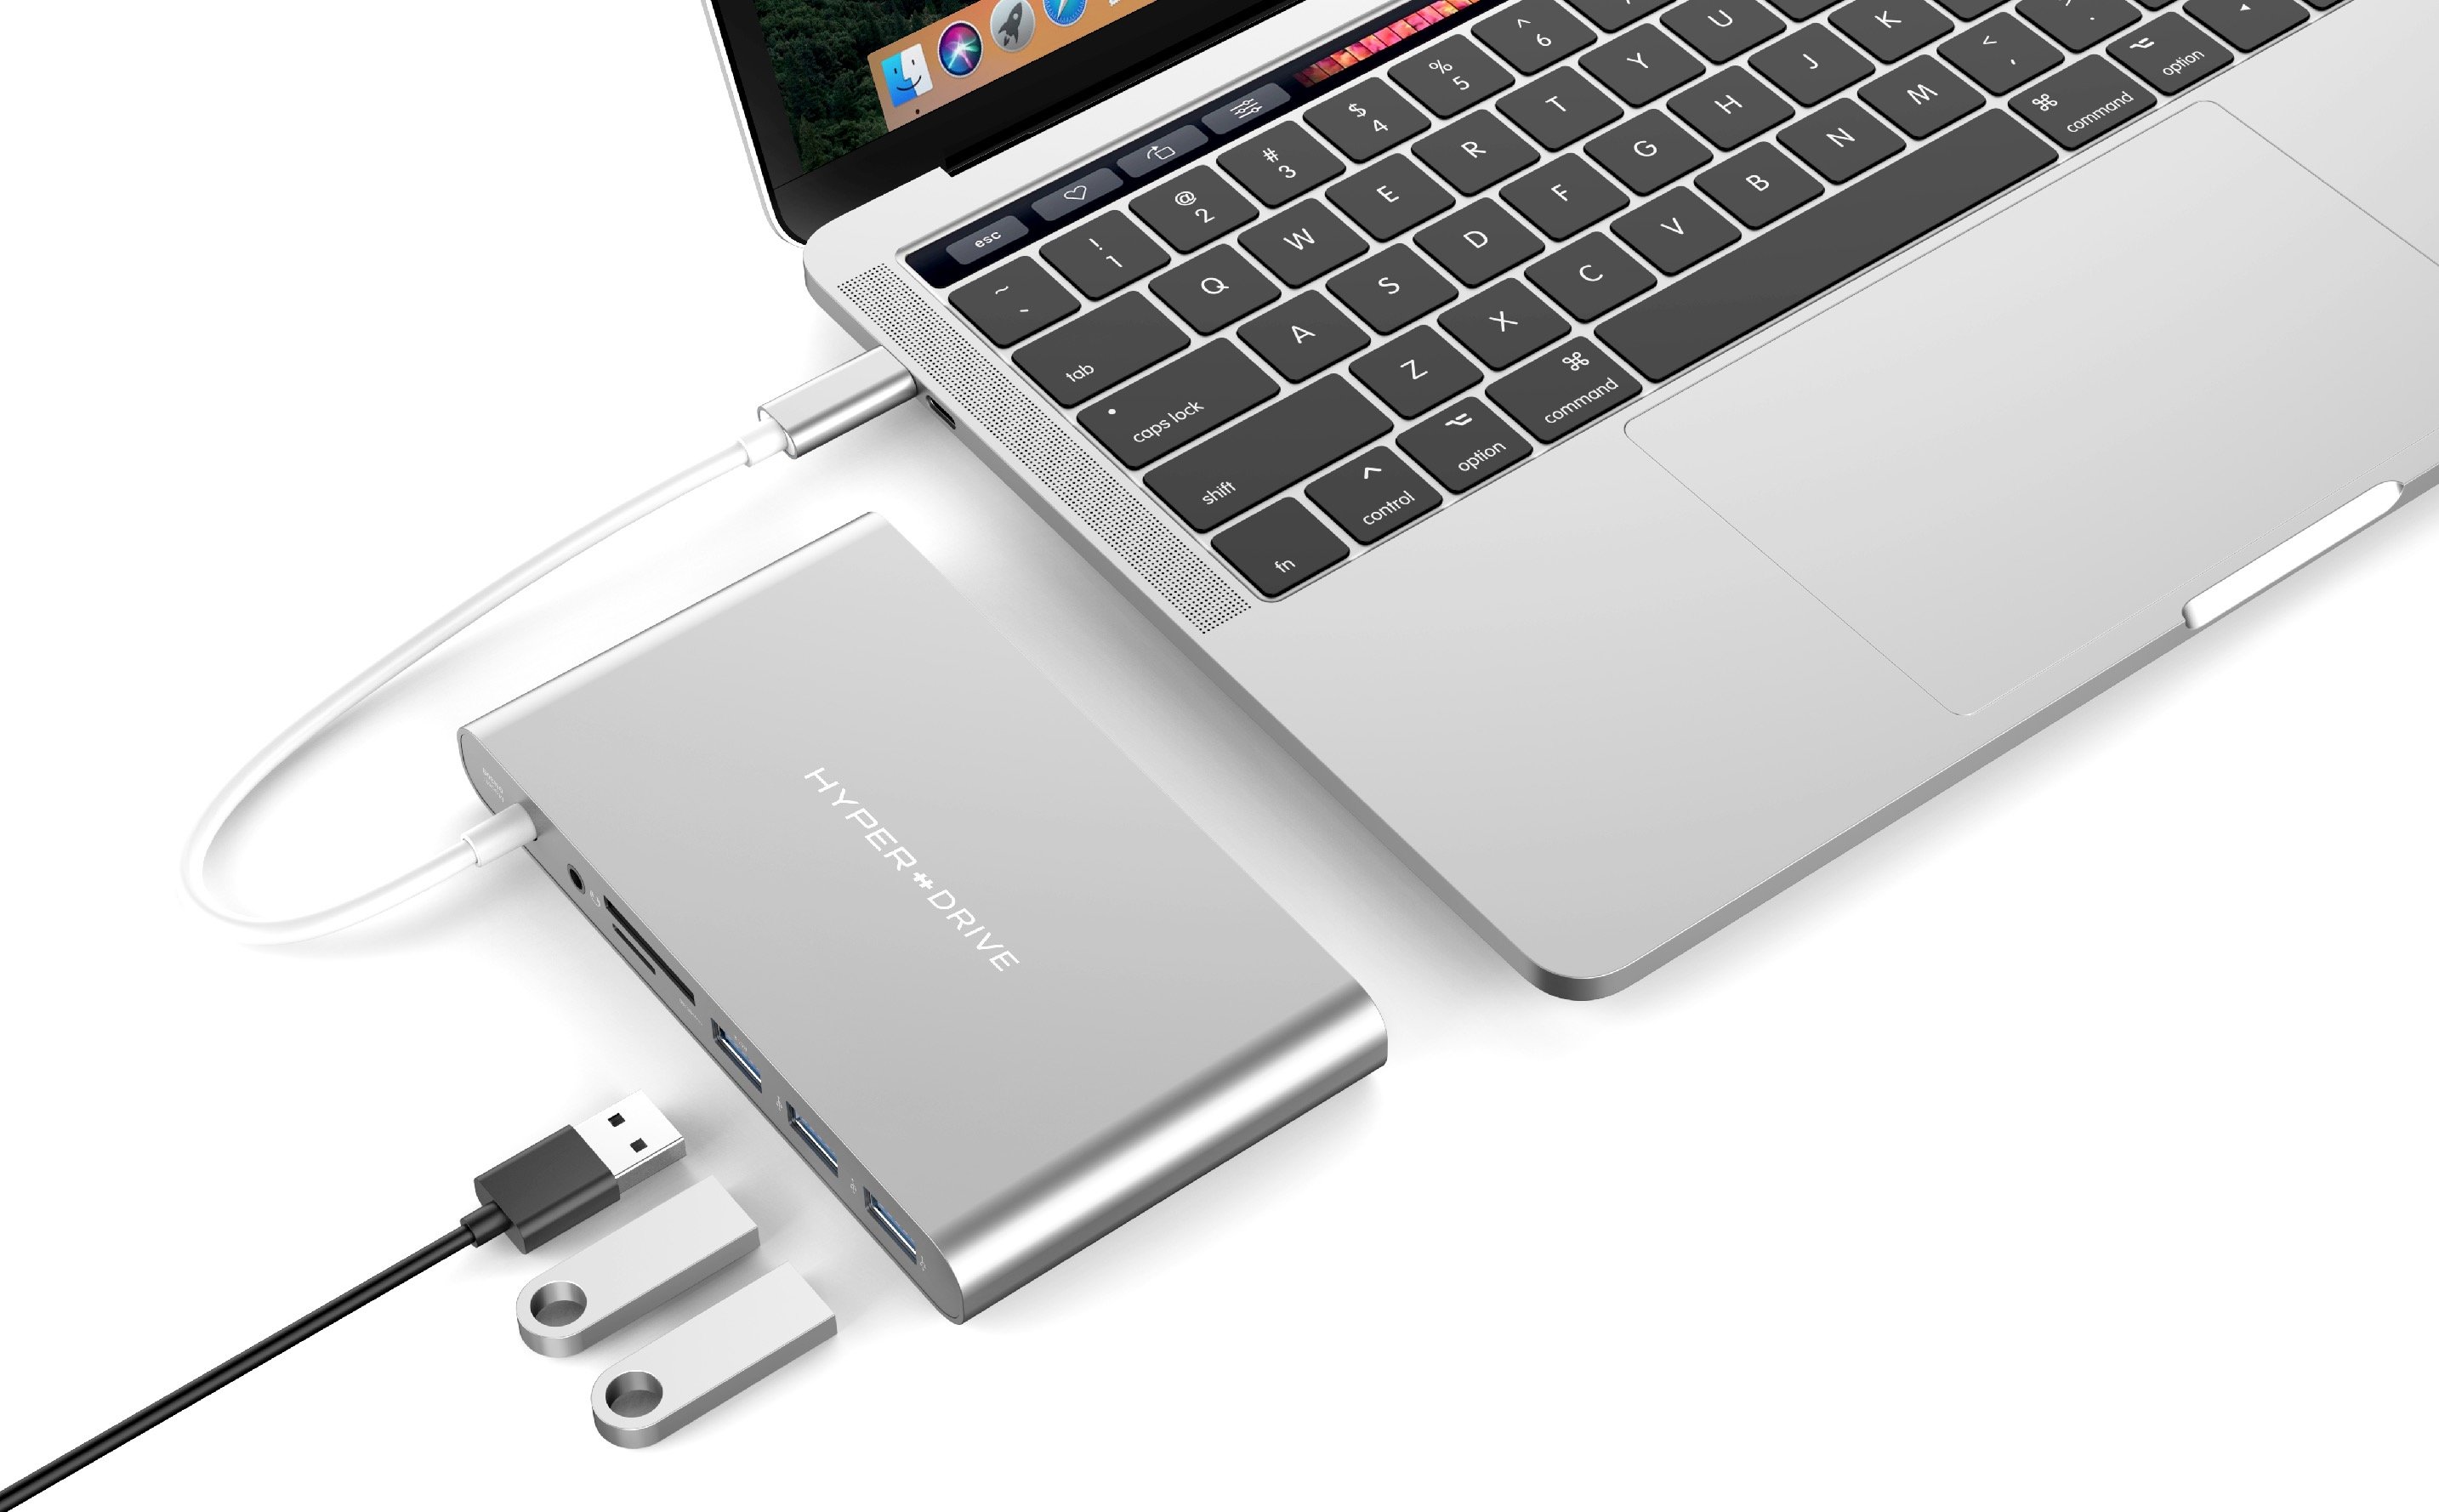 USB-хаб HyperDrive Ultimate USB-C Hub Silver для Macbook и других устройств с портом Type-C